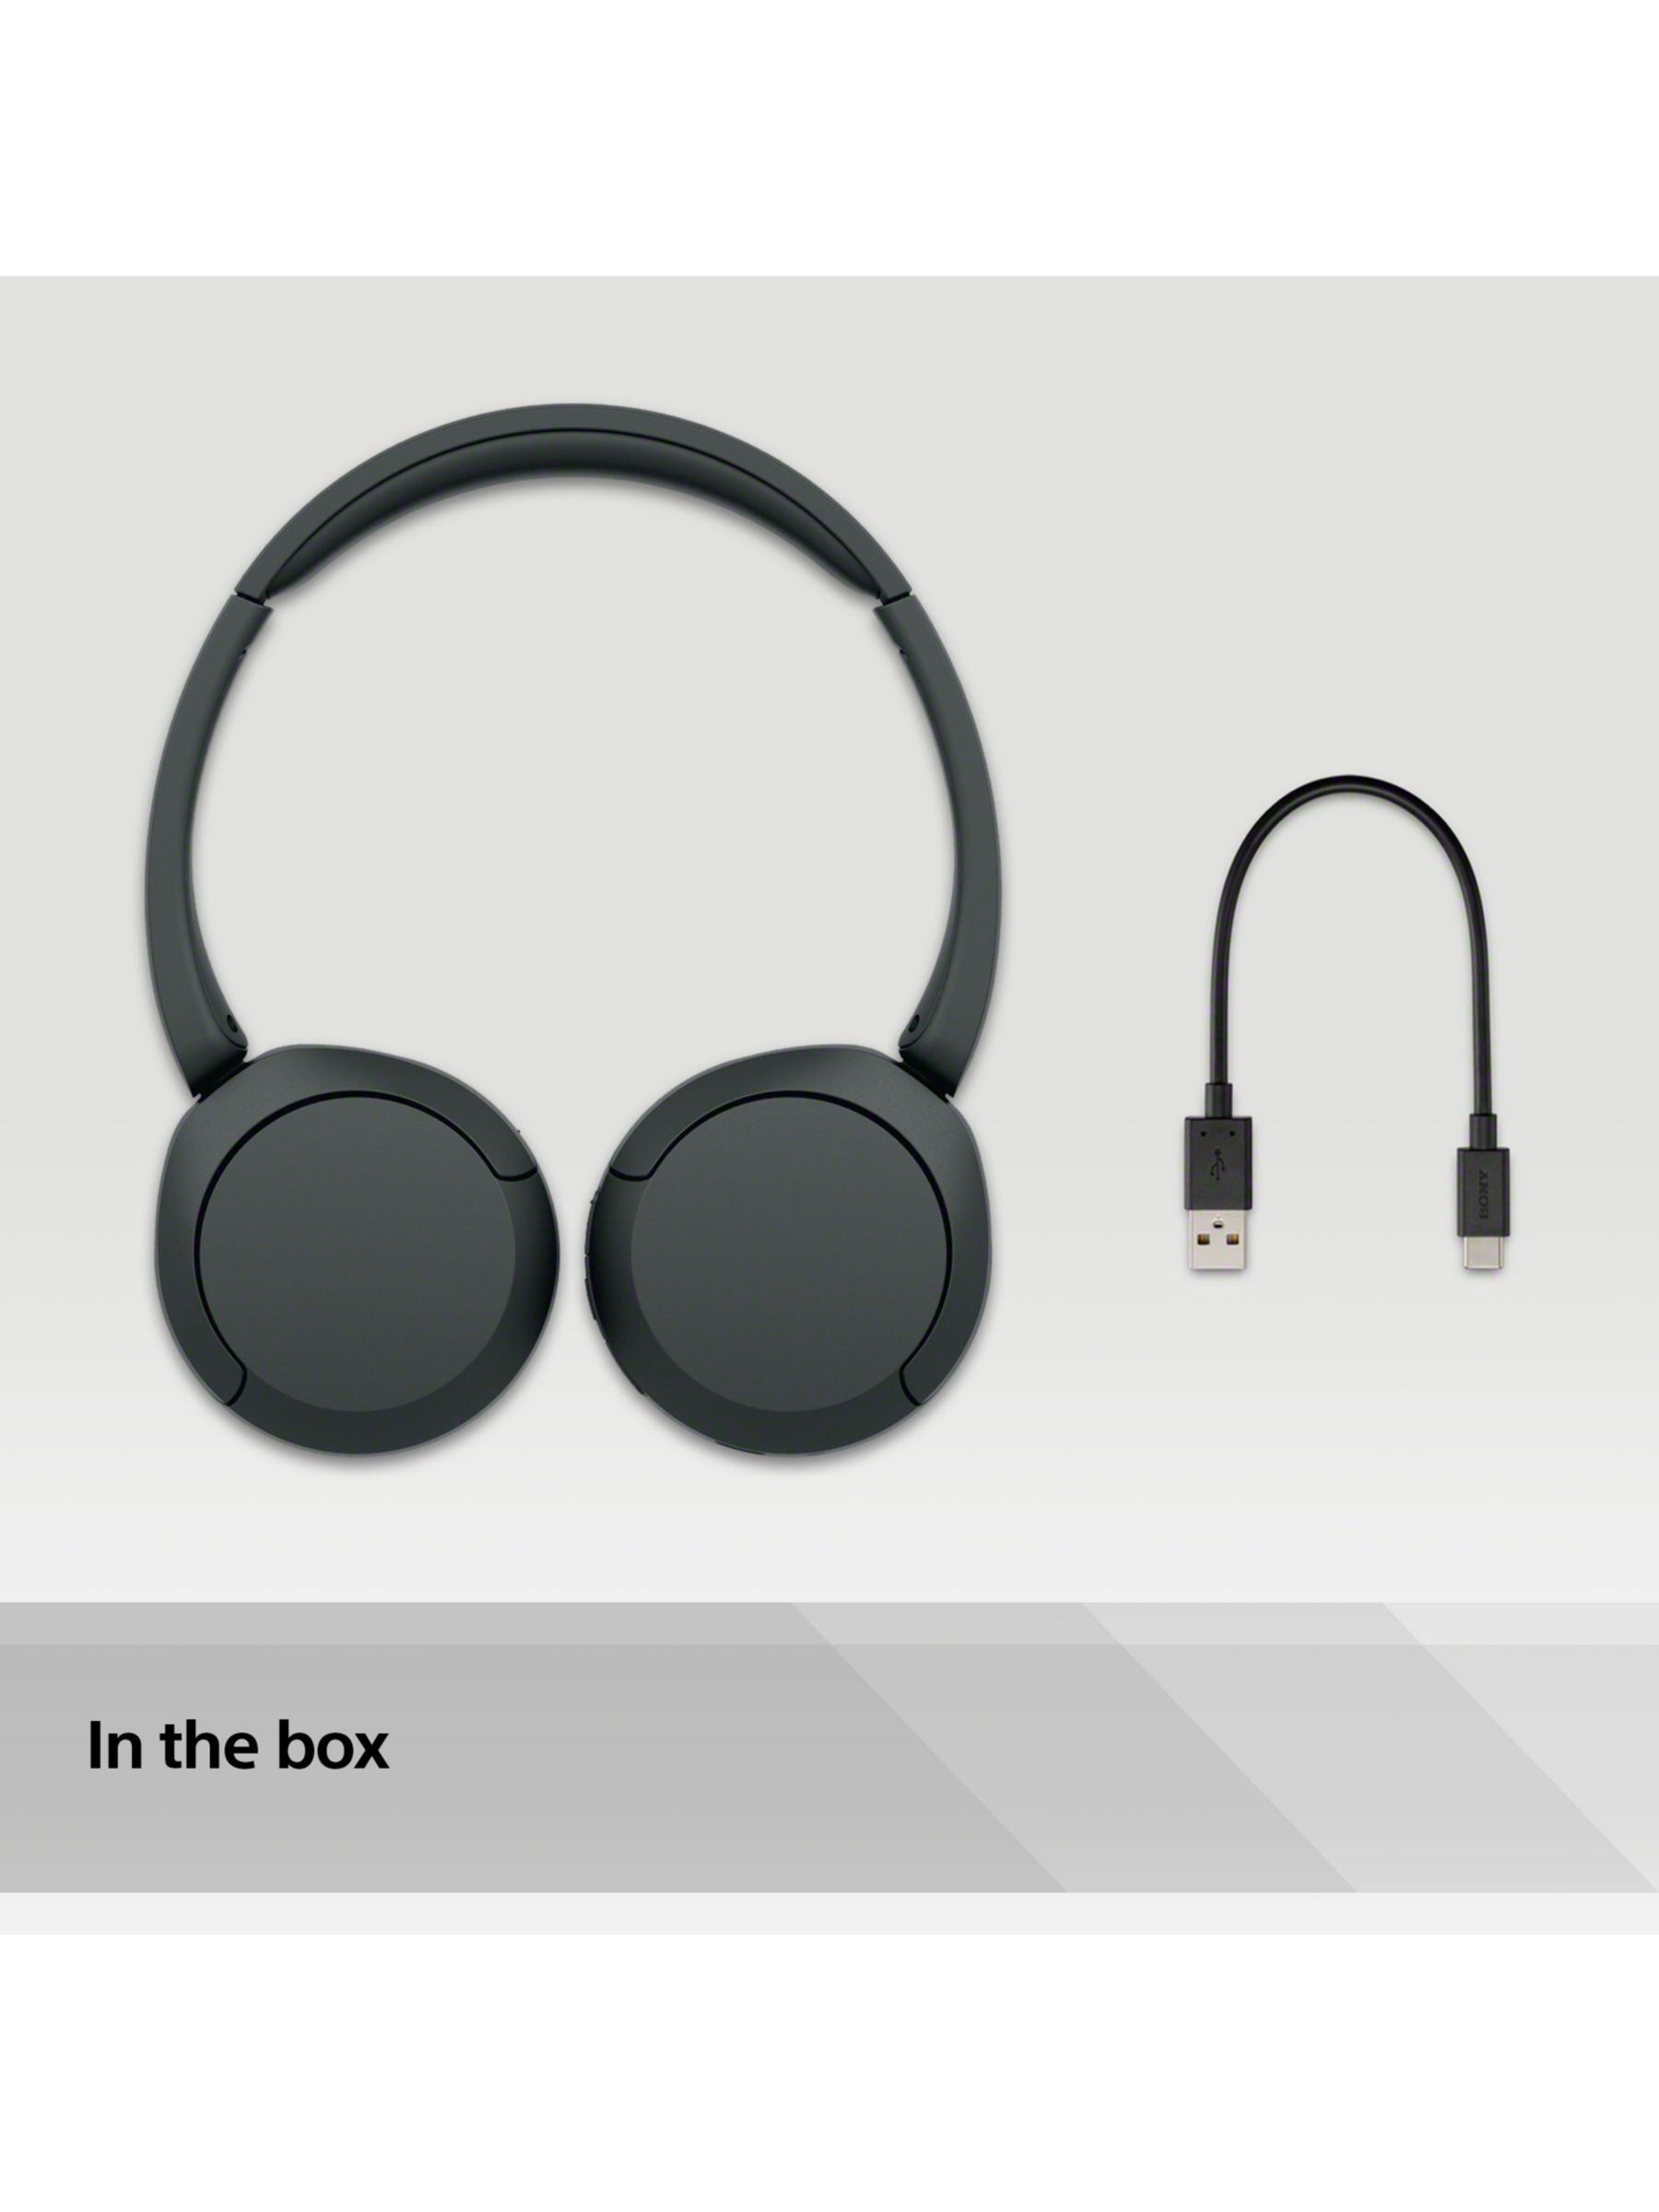  Sony WH-CH520 Wireless Headphones Bluetooth On-Ear